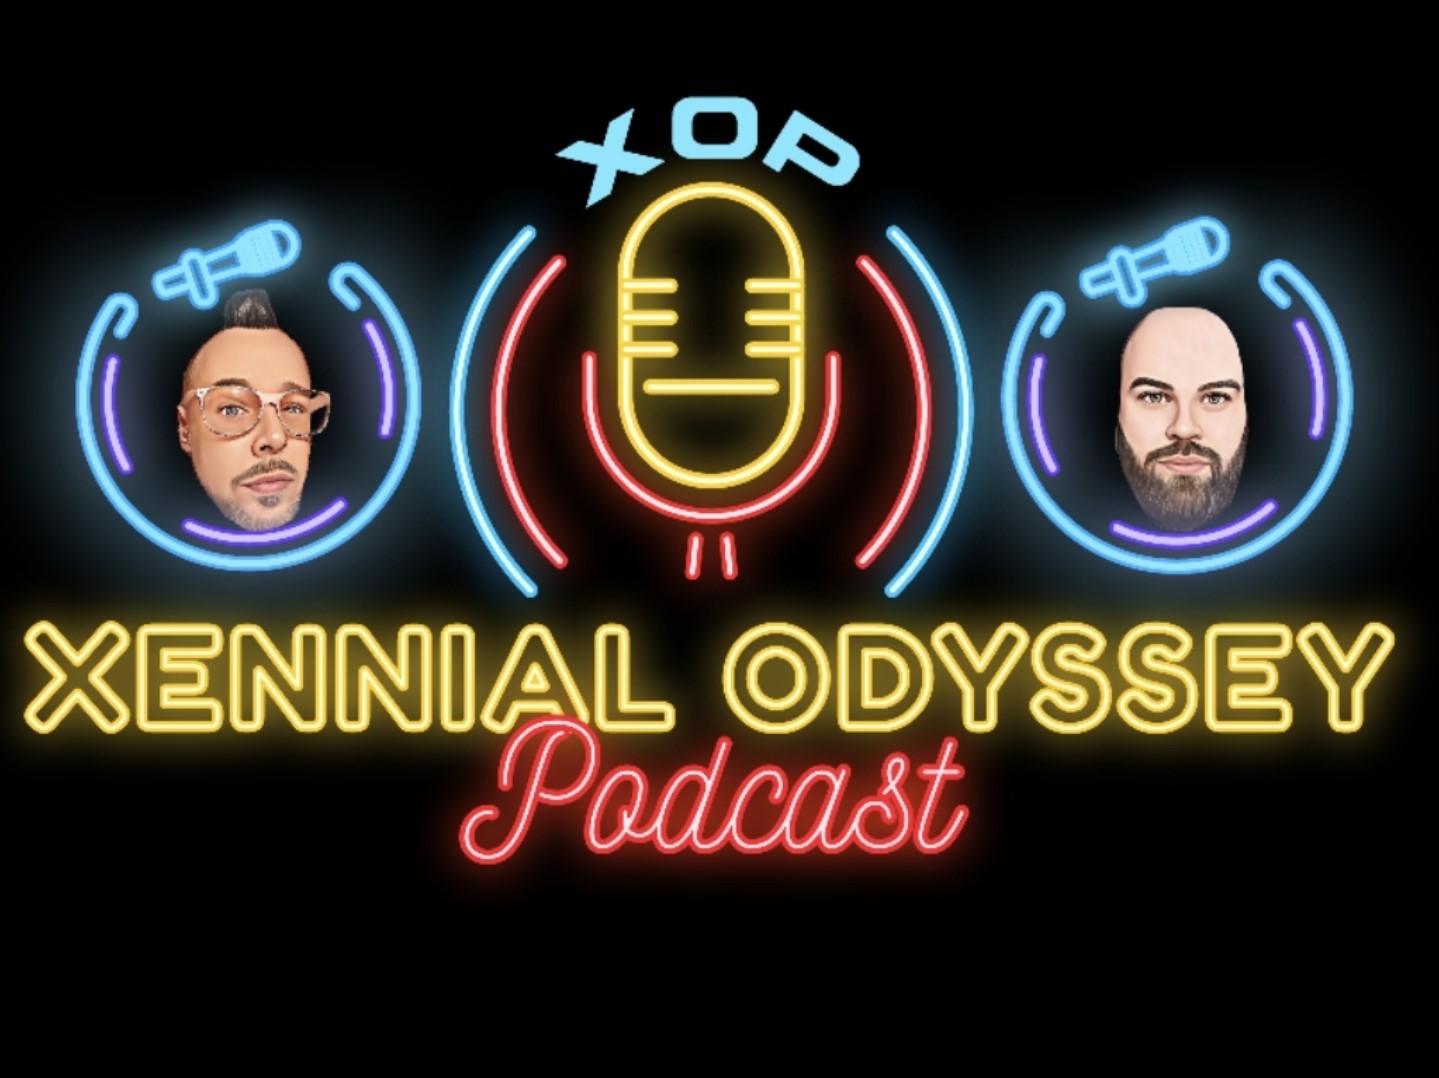 The Xennial Odyssey Podcast